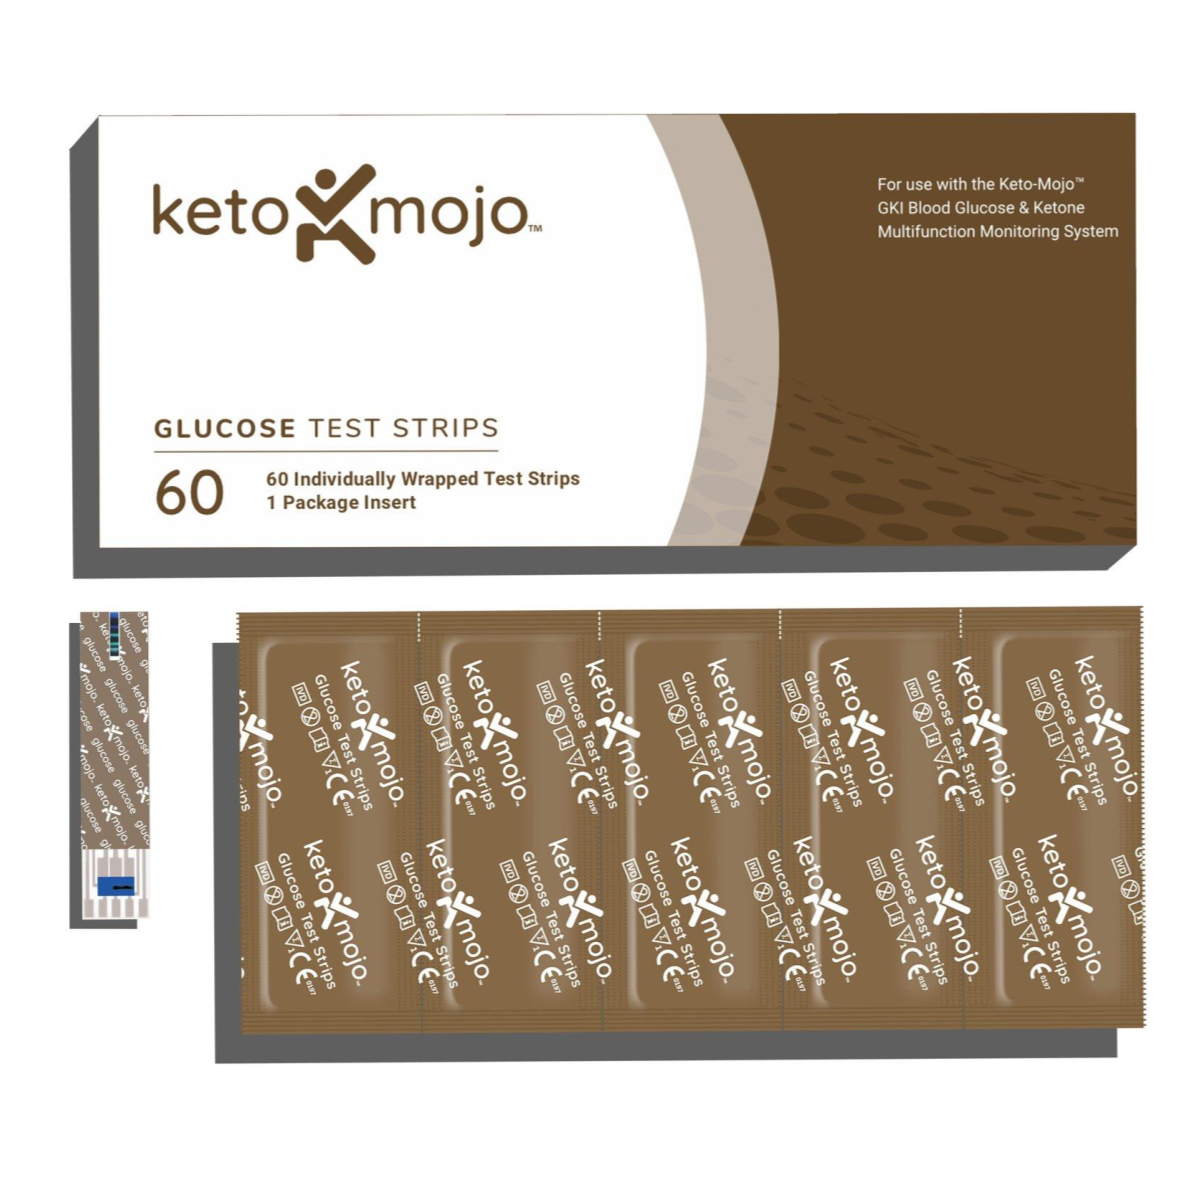 Keto-Mojo GKI Glucose Test Strips (60 Strips) For Keto-Mojo GKI Bluetooth Only (European Model)